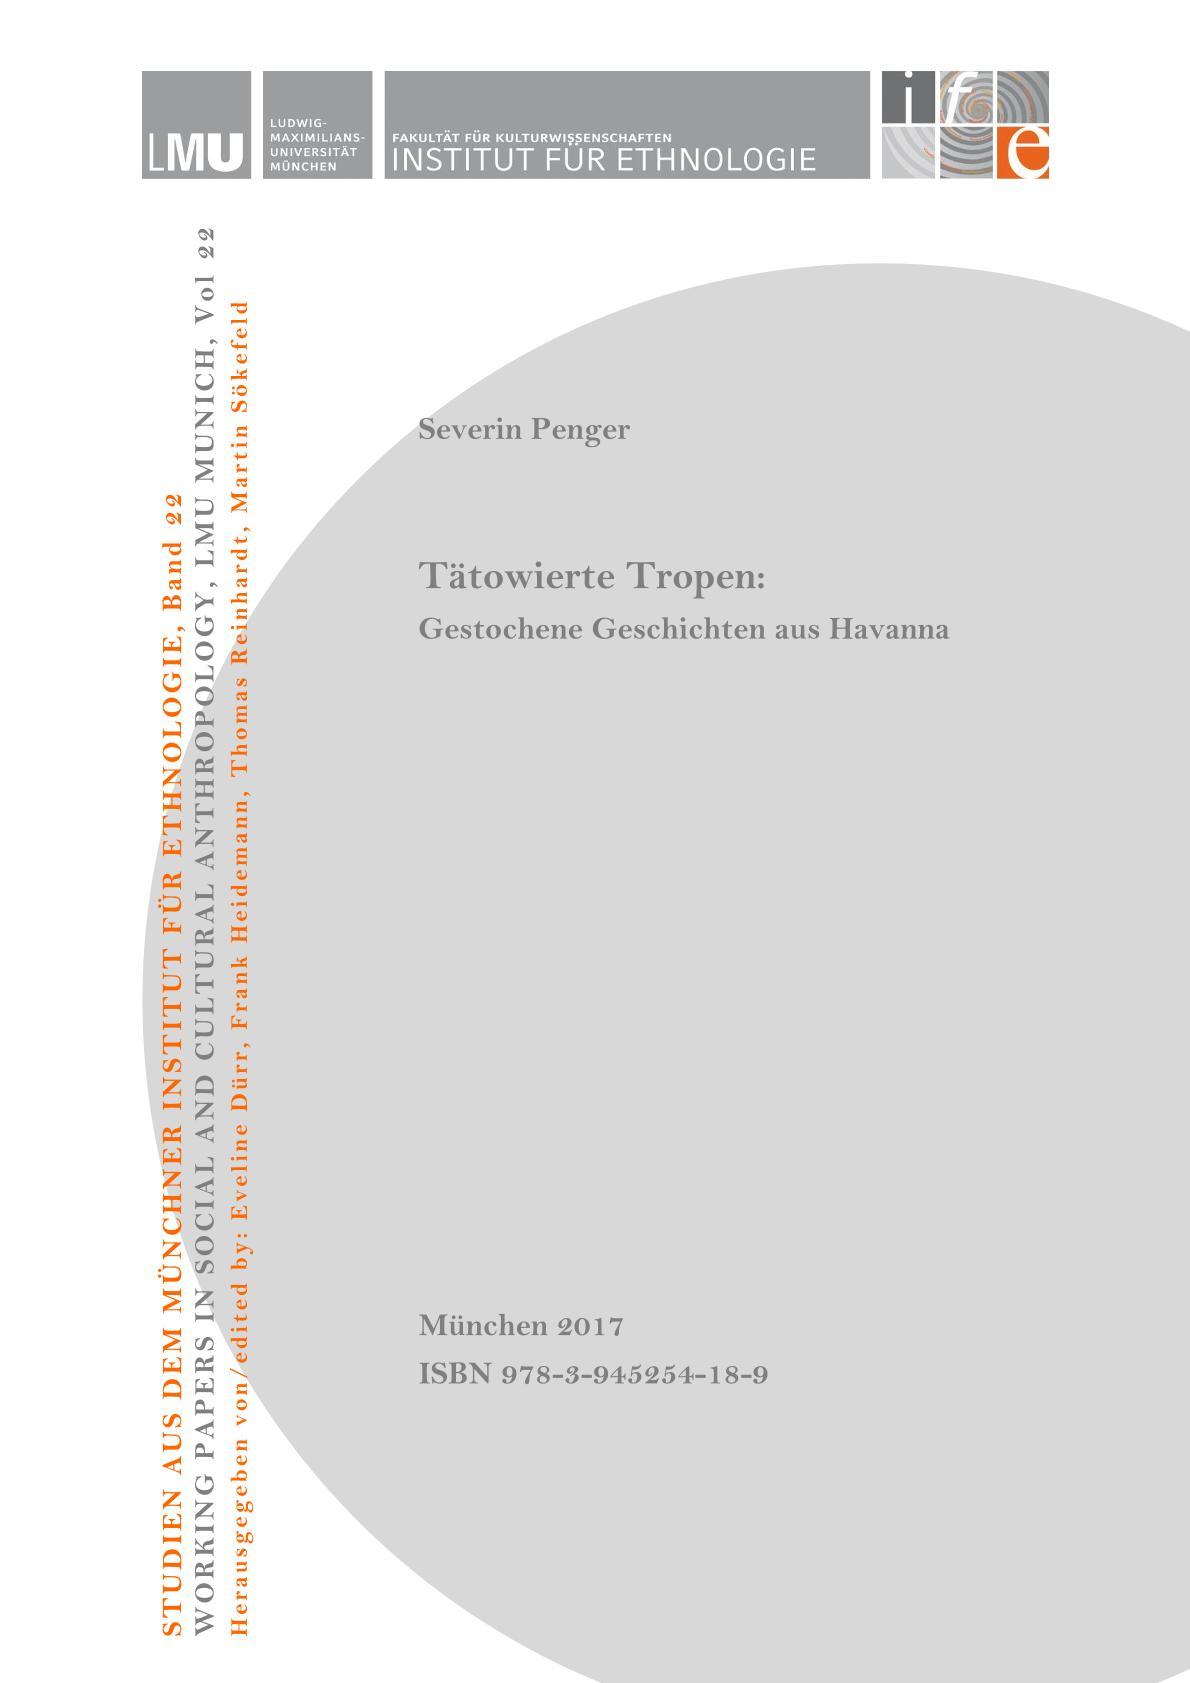 Studien aus dem Münchner Institut für Ethnologie / Working Papers in Social and Cultural Anthropology, Bd. 22.